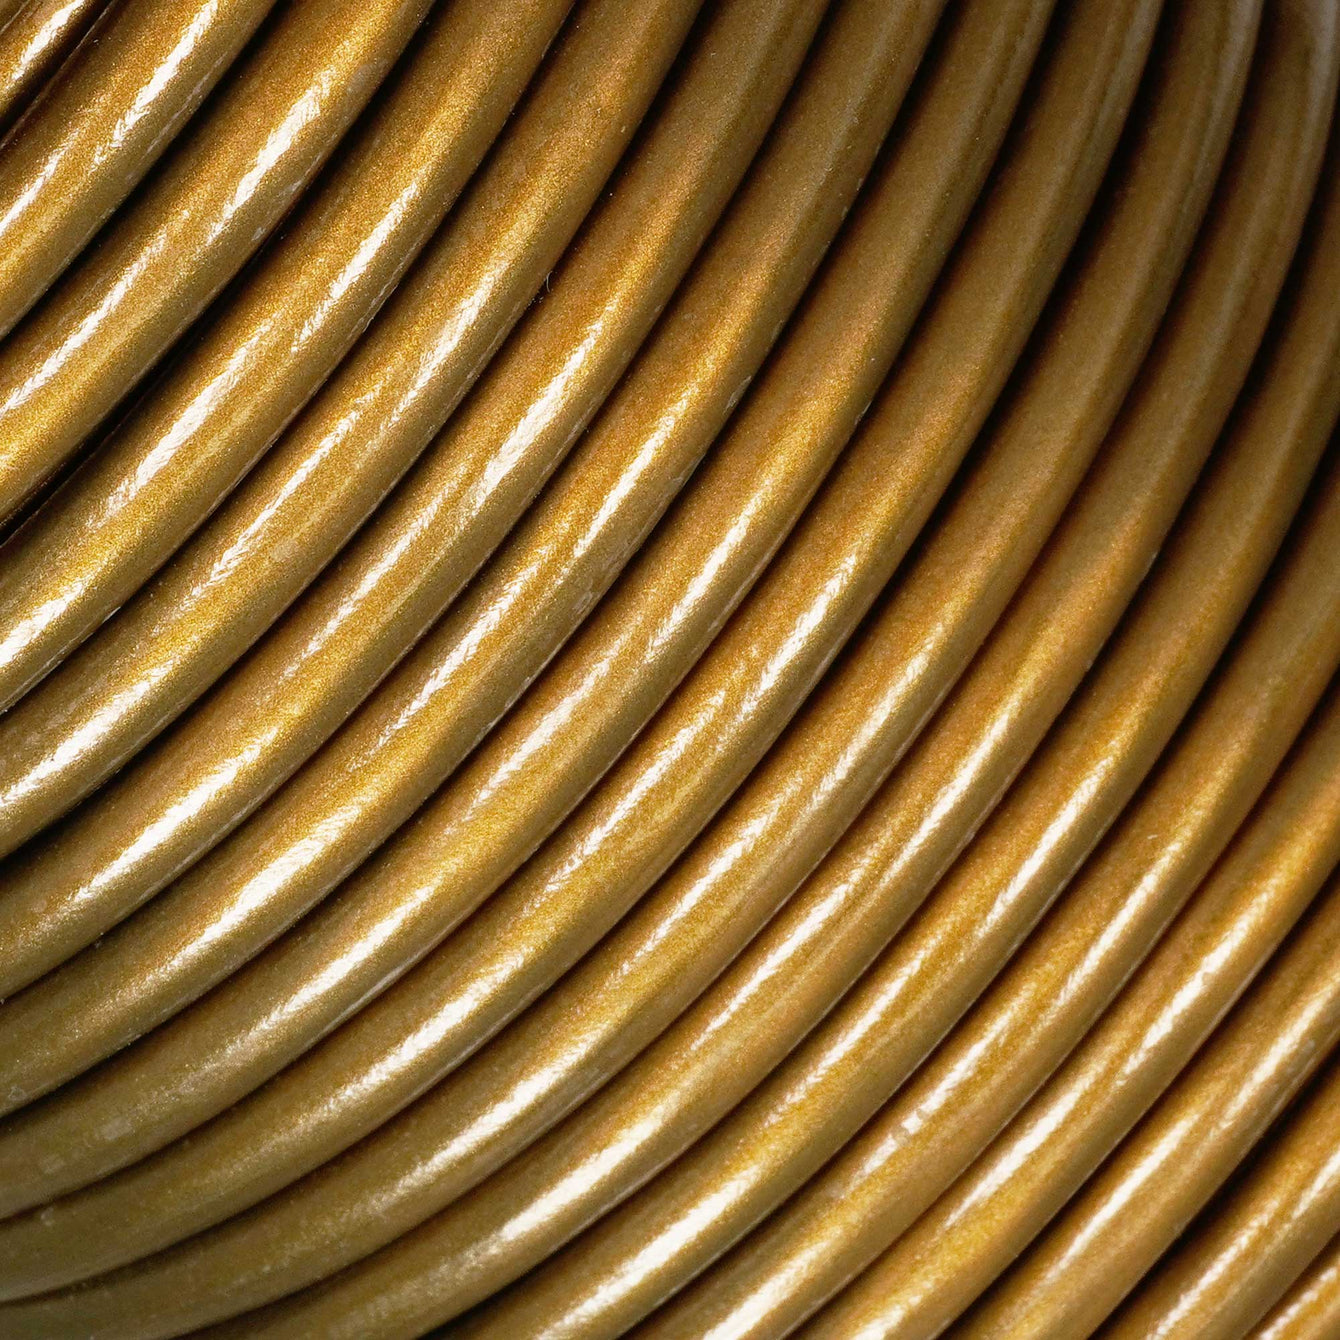 ElekTek Lighting Cable Flex 3 Core Gold, Black, White, Clear PVC Outer Per Linear Metre 